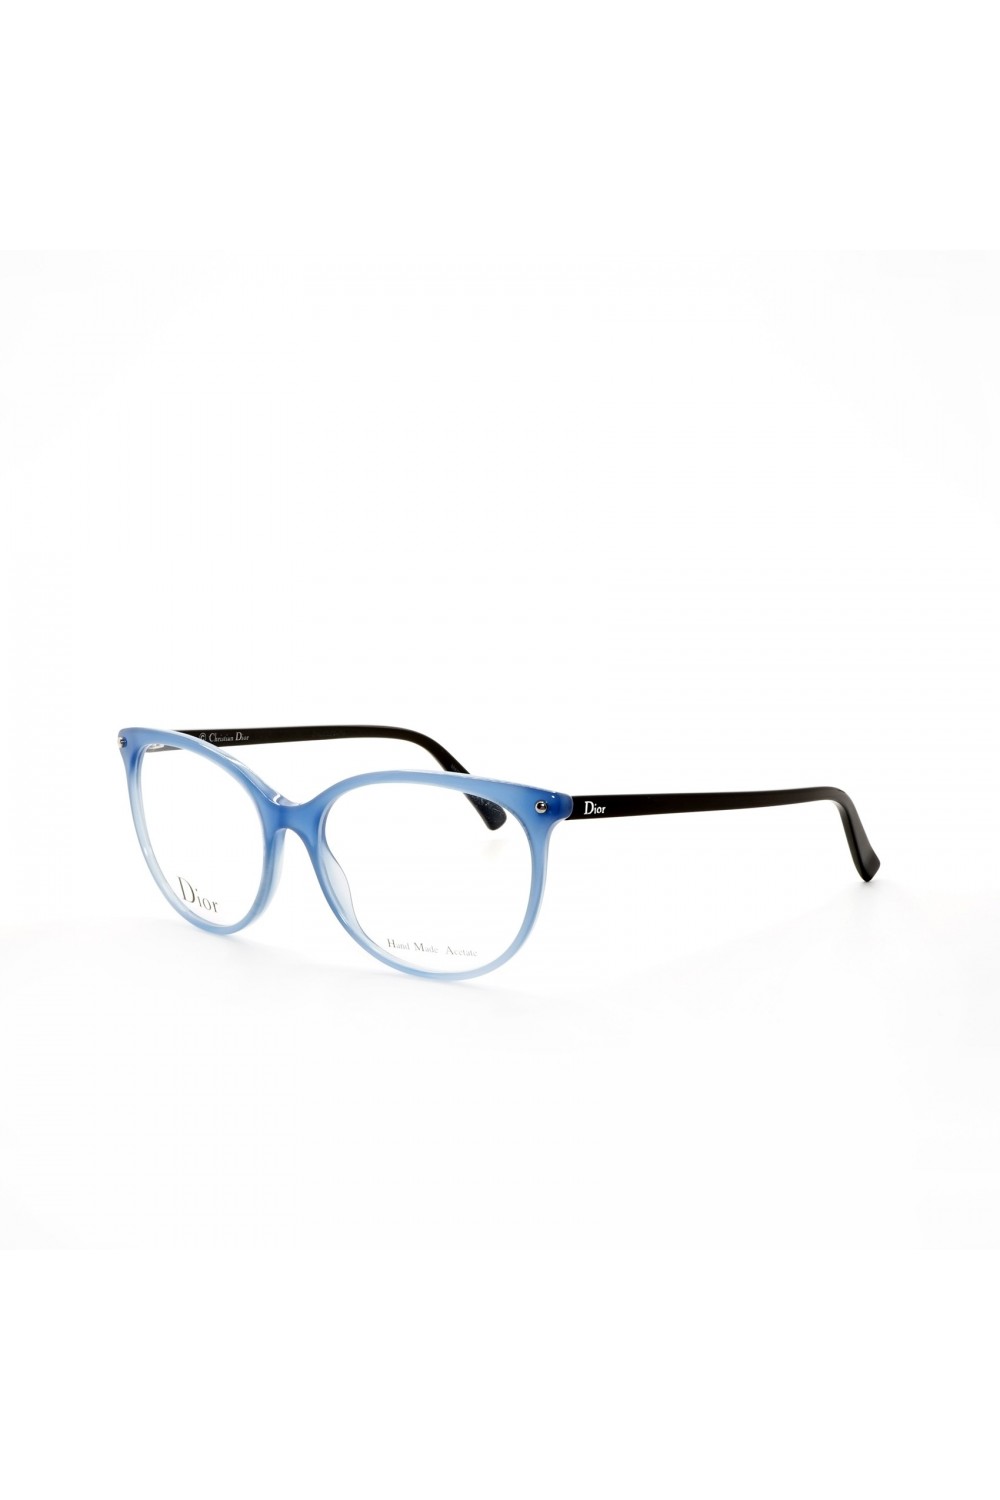 Christian Dior - Occhiali da vista in celluloide cat eye per donna azzurro -